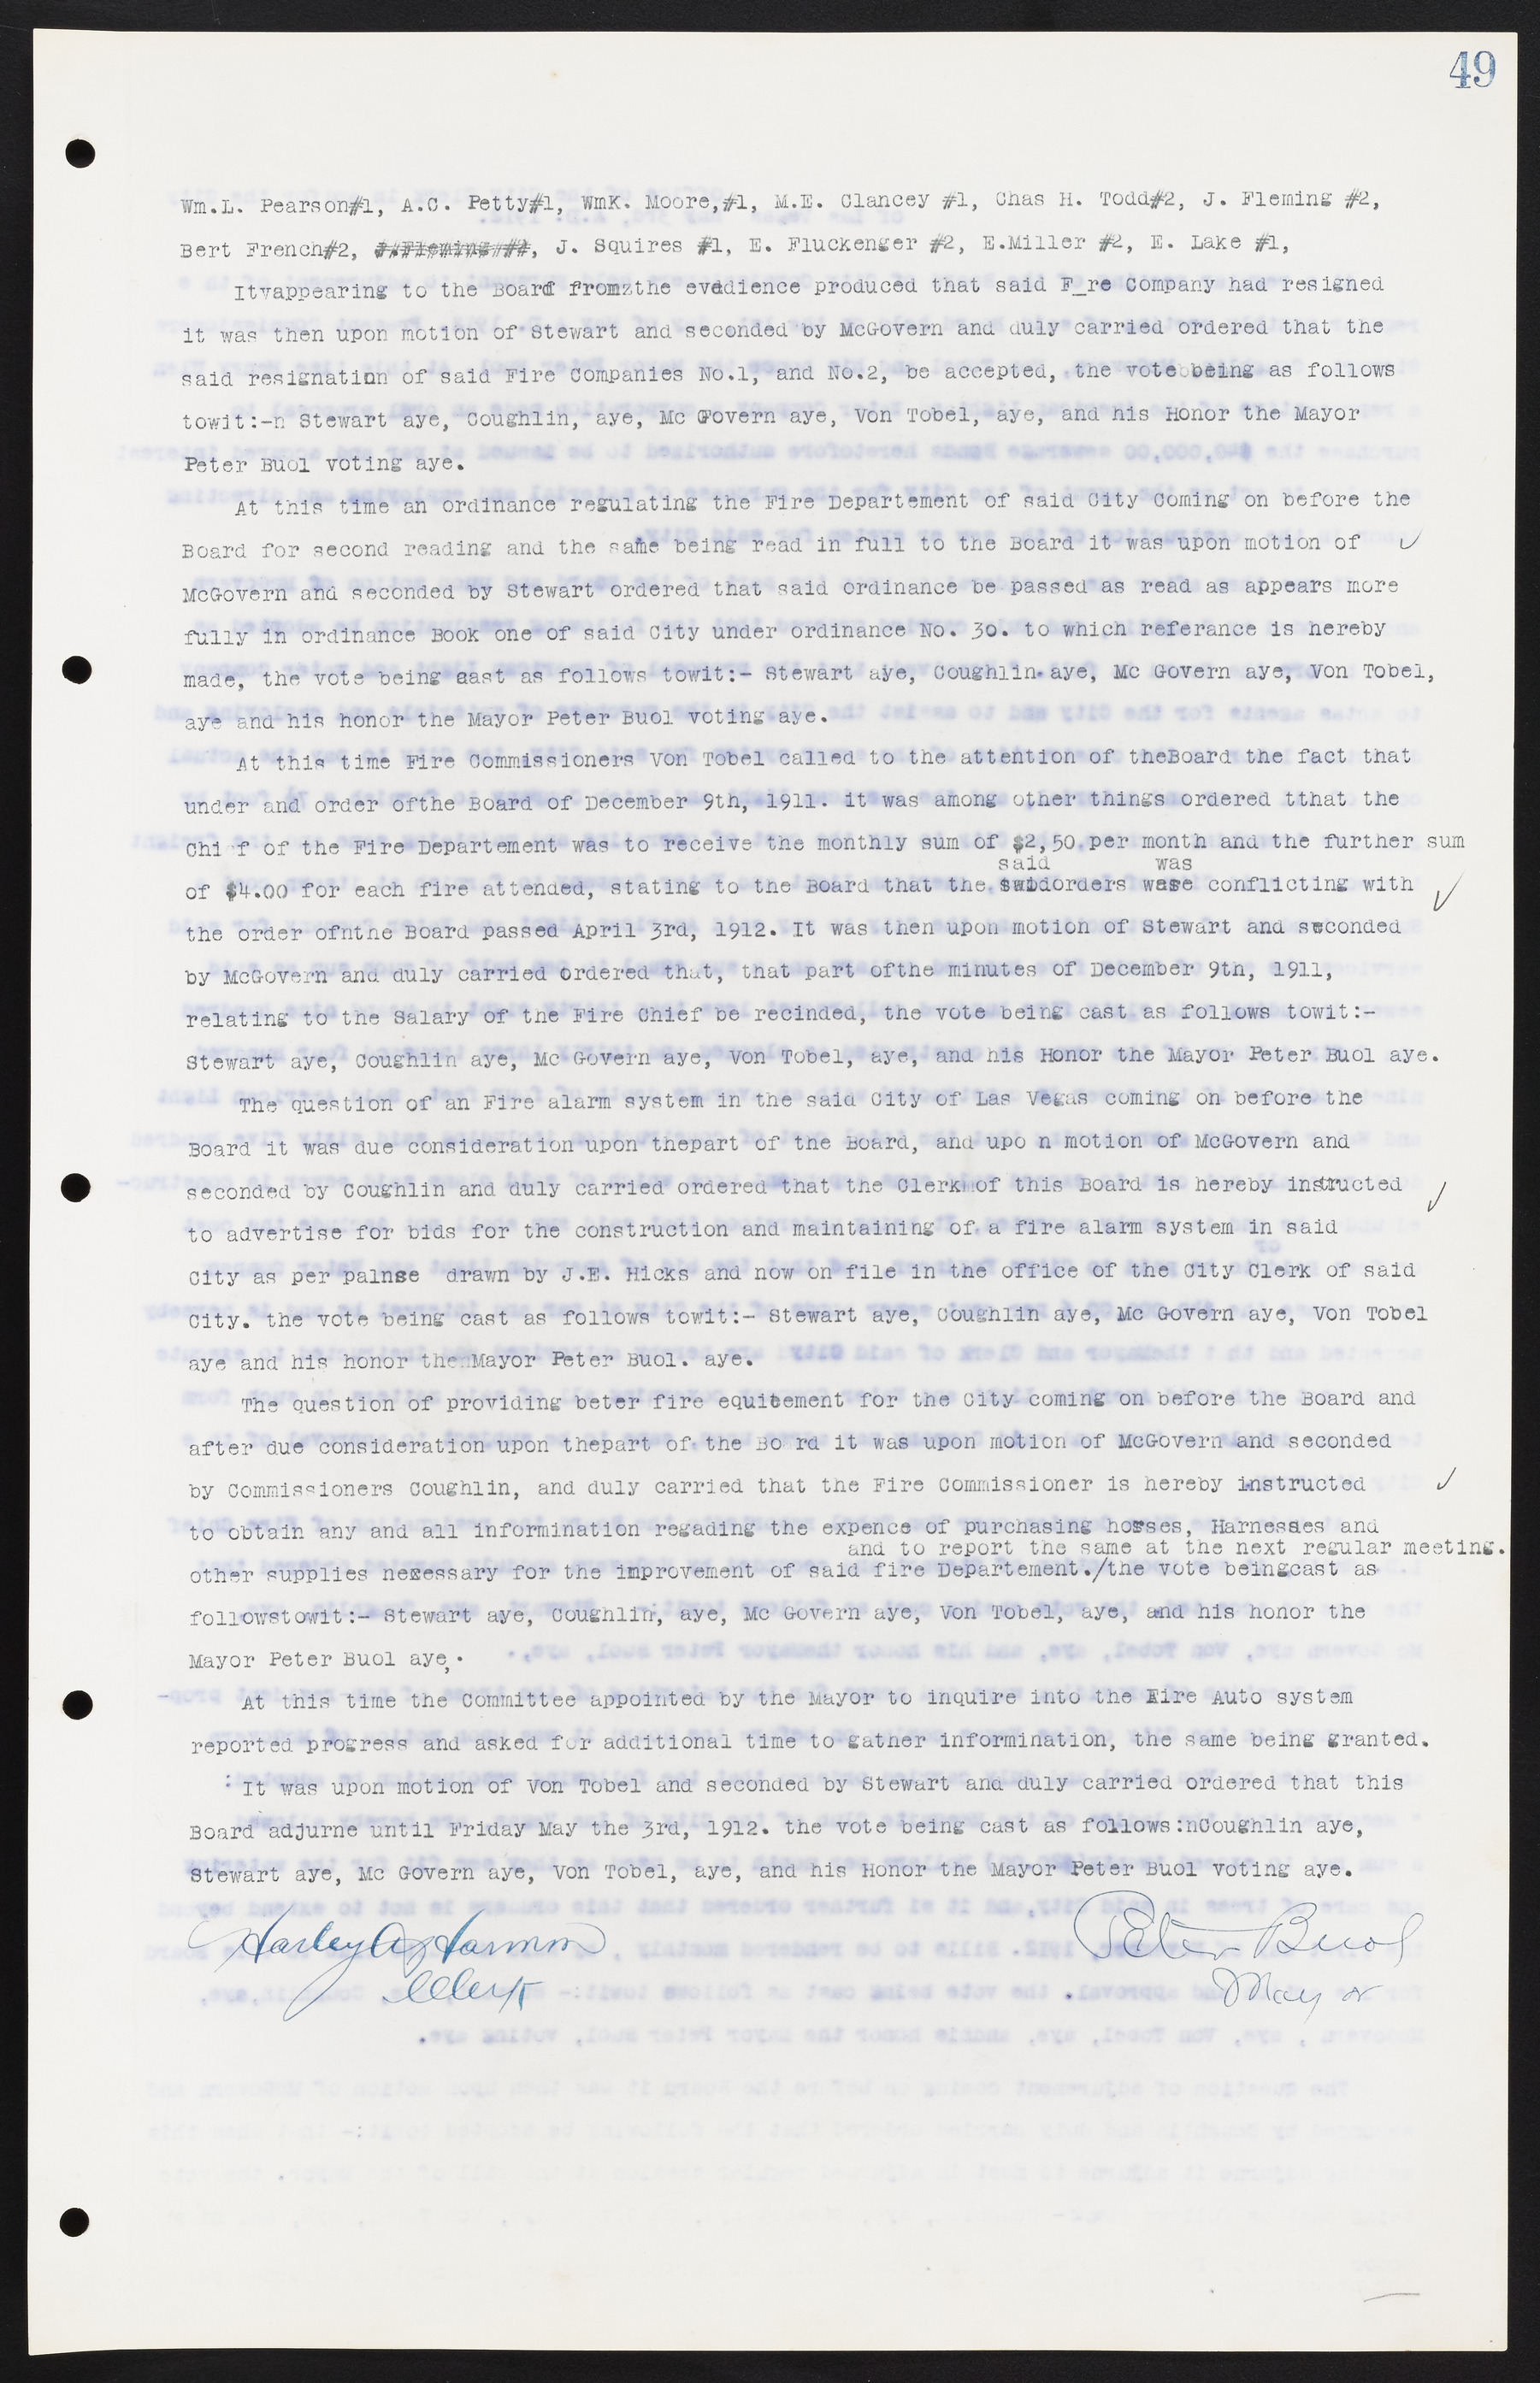 Las Vegas City Commission Minutes, June 22, 1911 to February 7, 1922, lvc000001-63